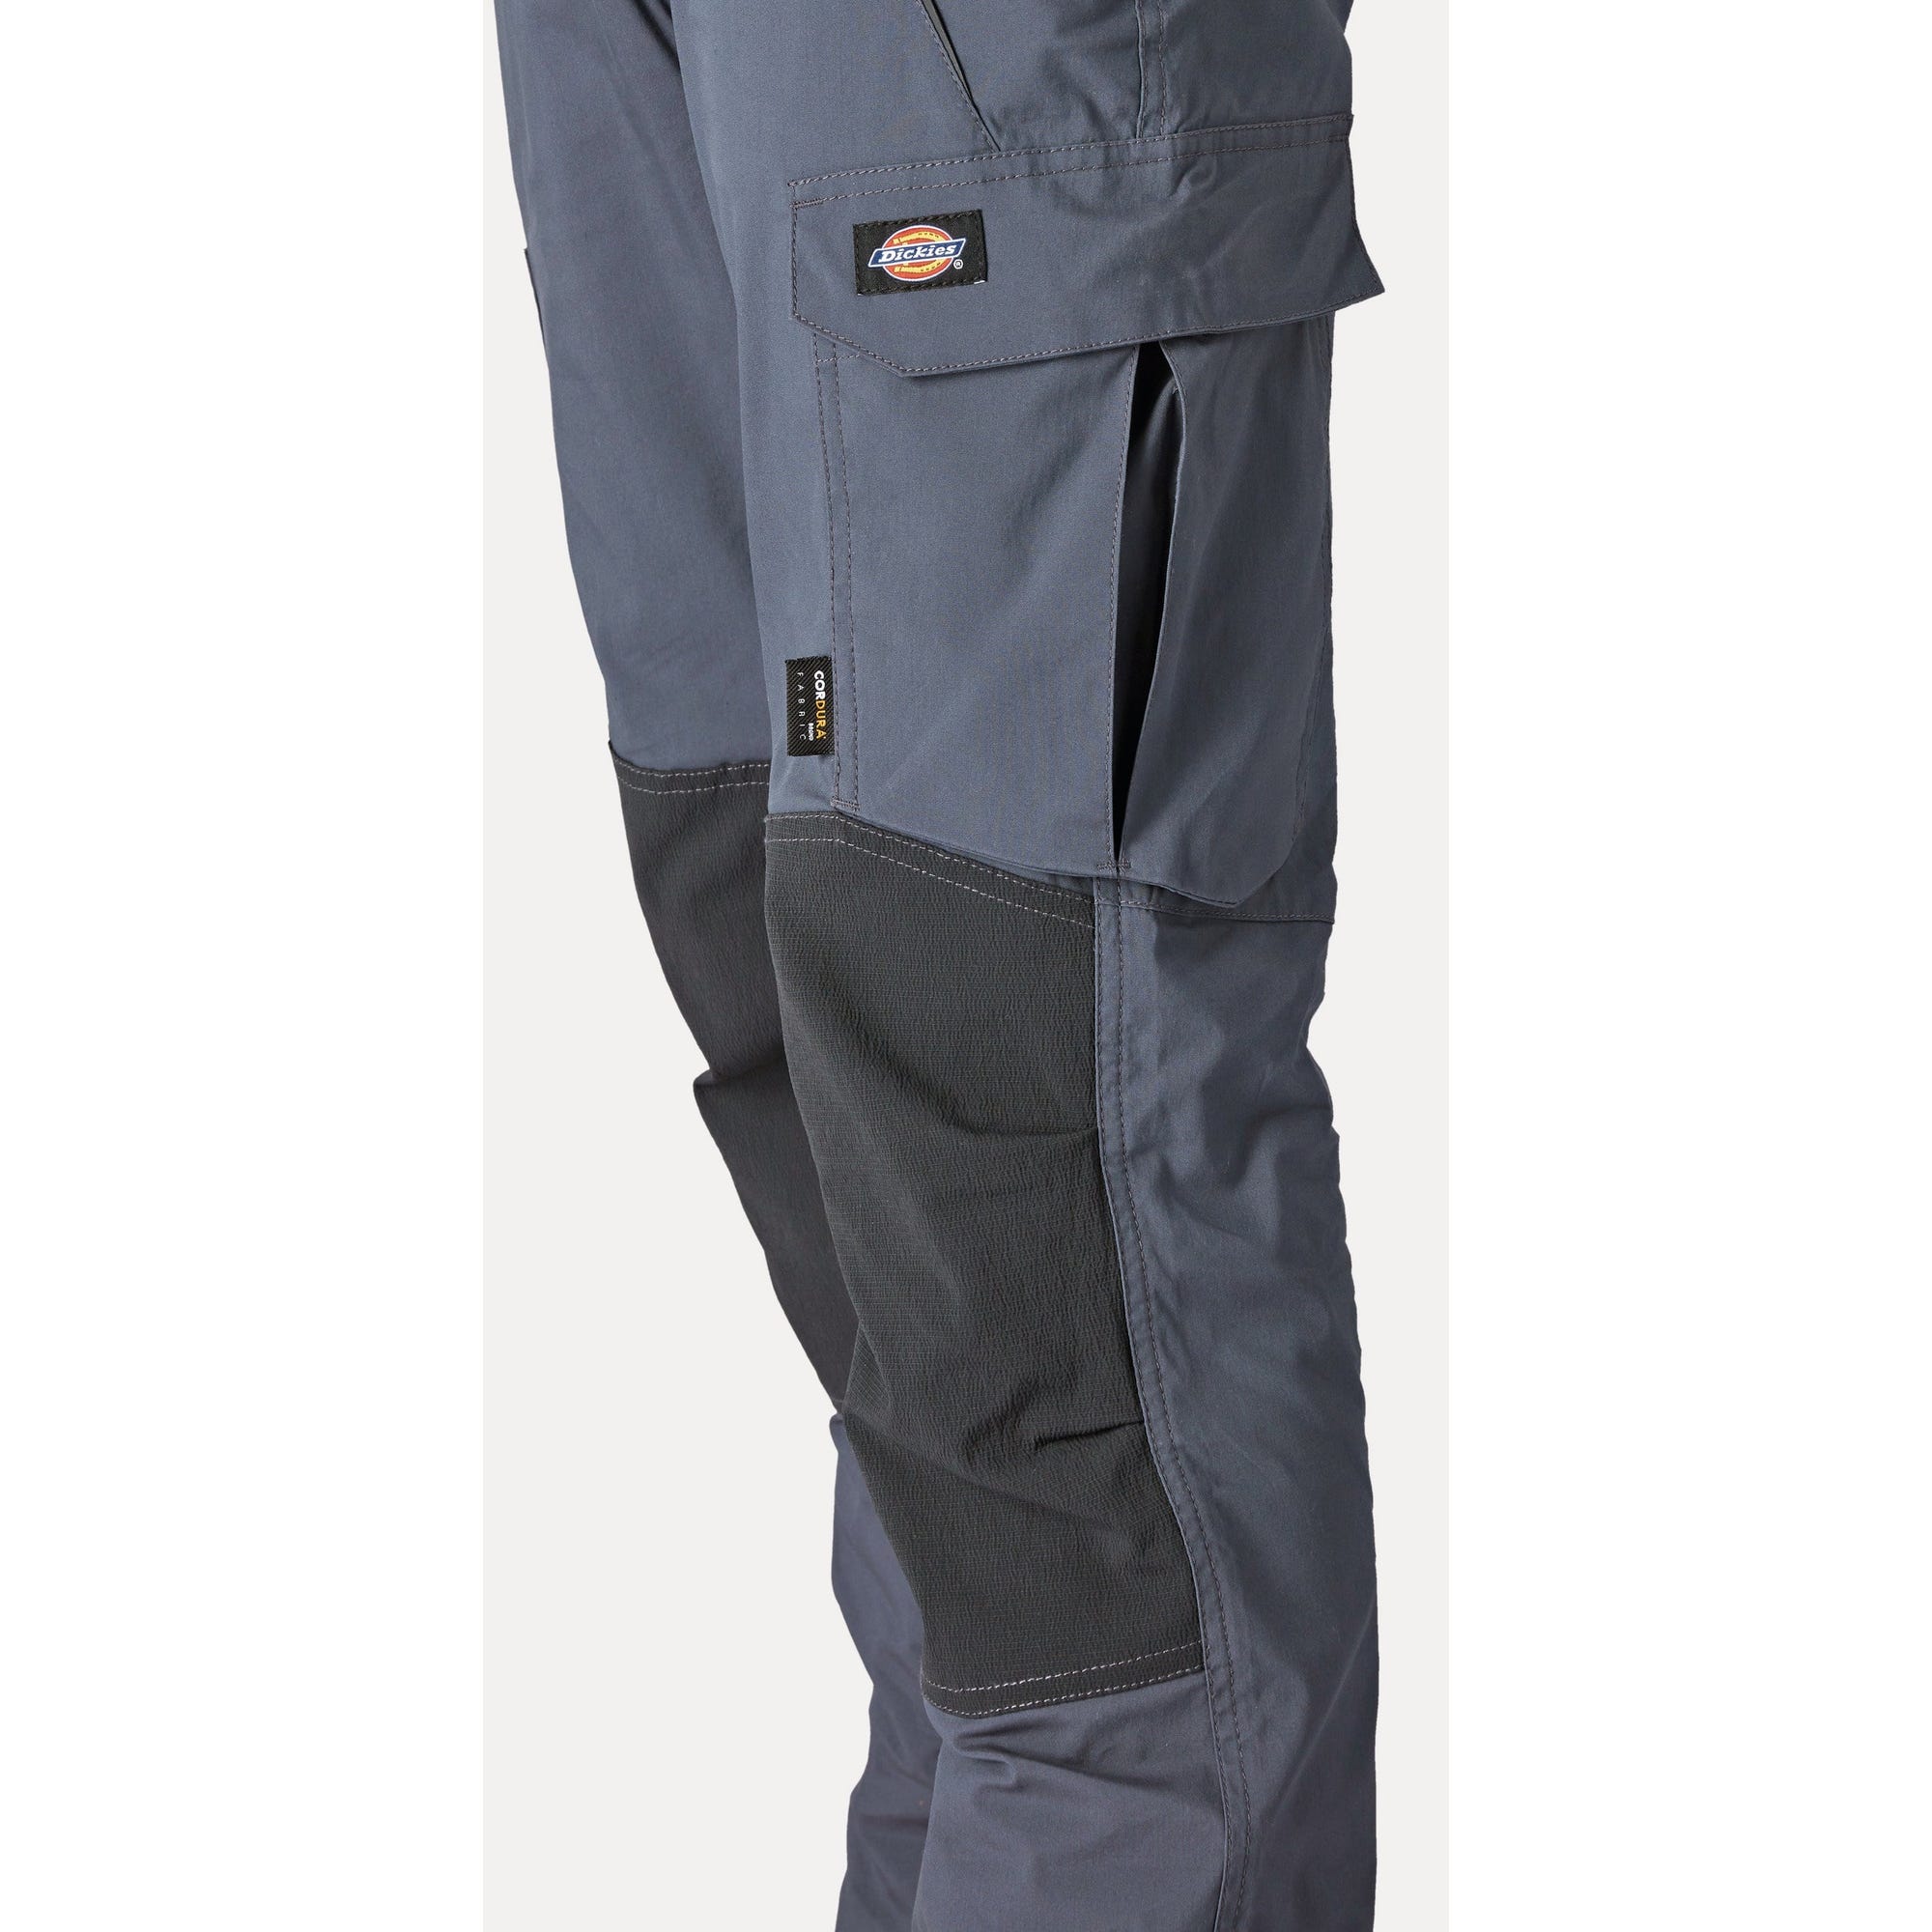 Pantalon léger Flex Gris - Dickies - Taille 38 8